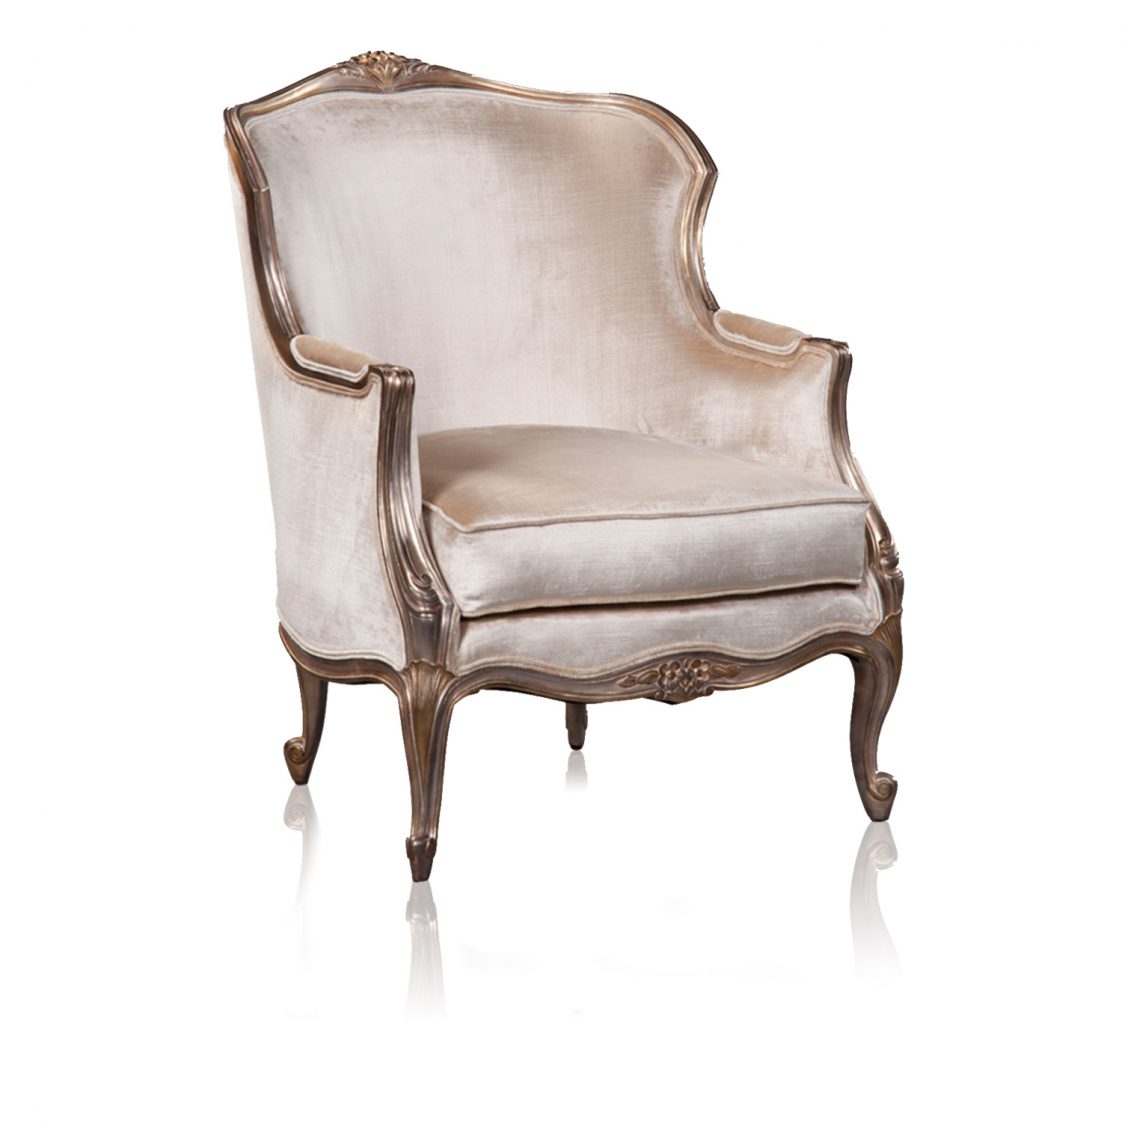 *Louis XV Deep Carved Arm Chair - Silver